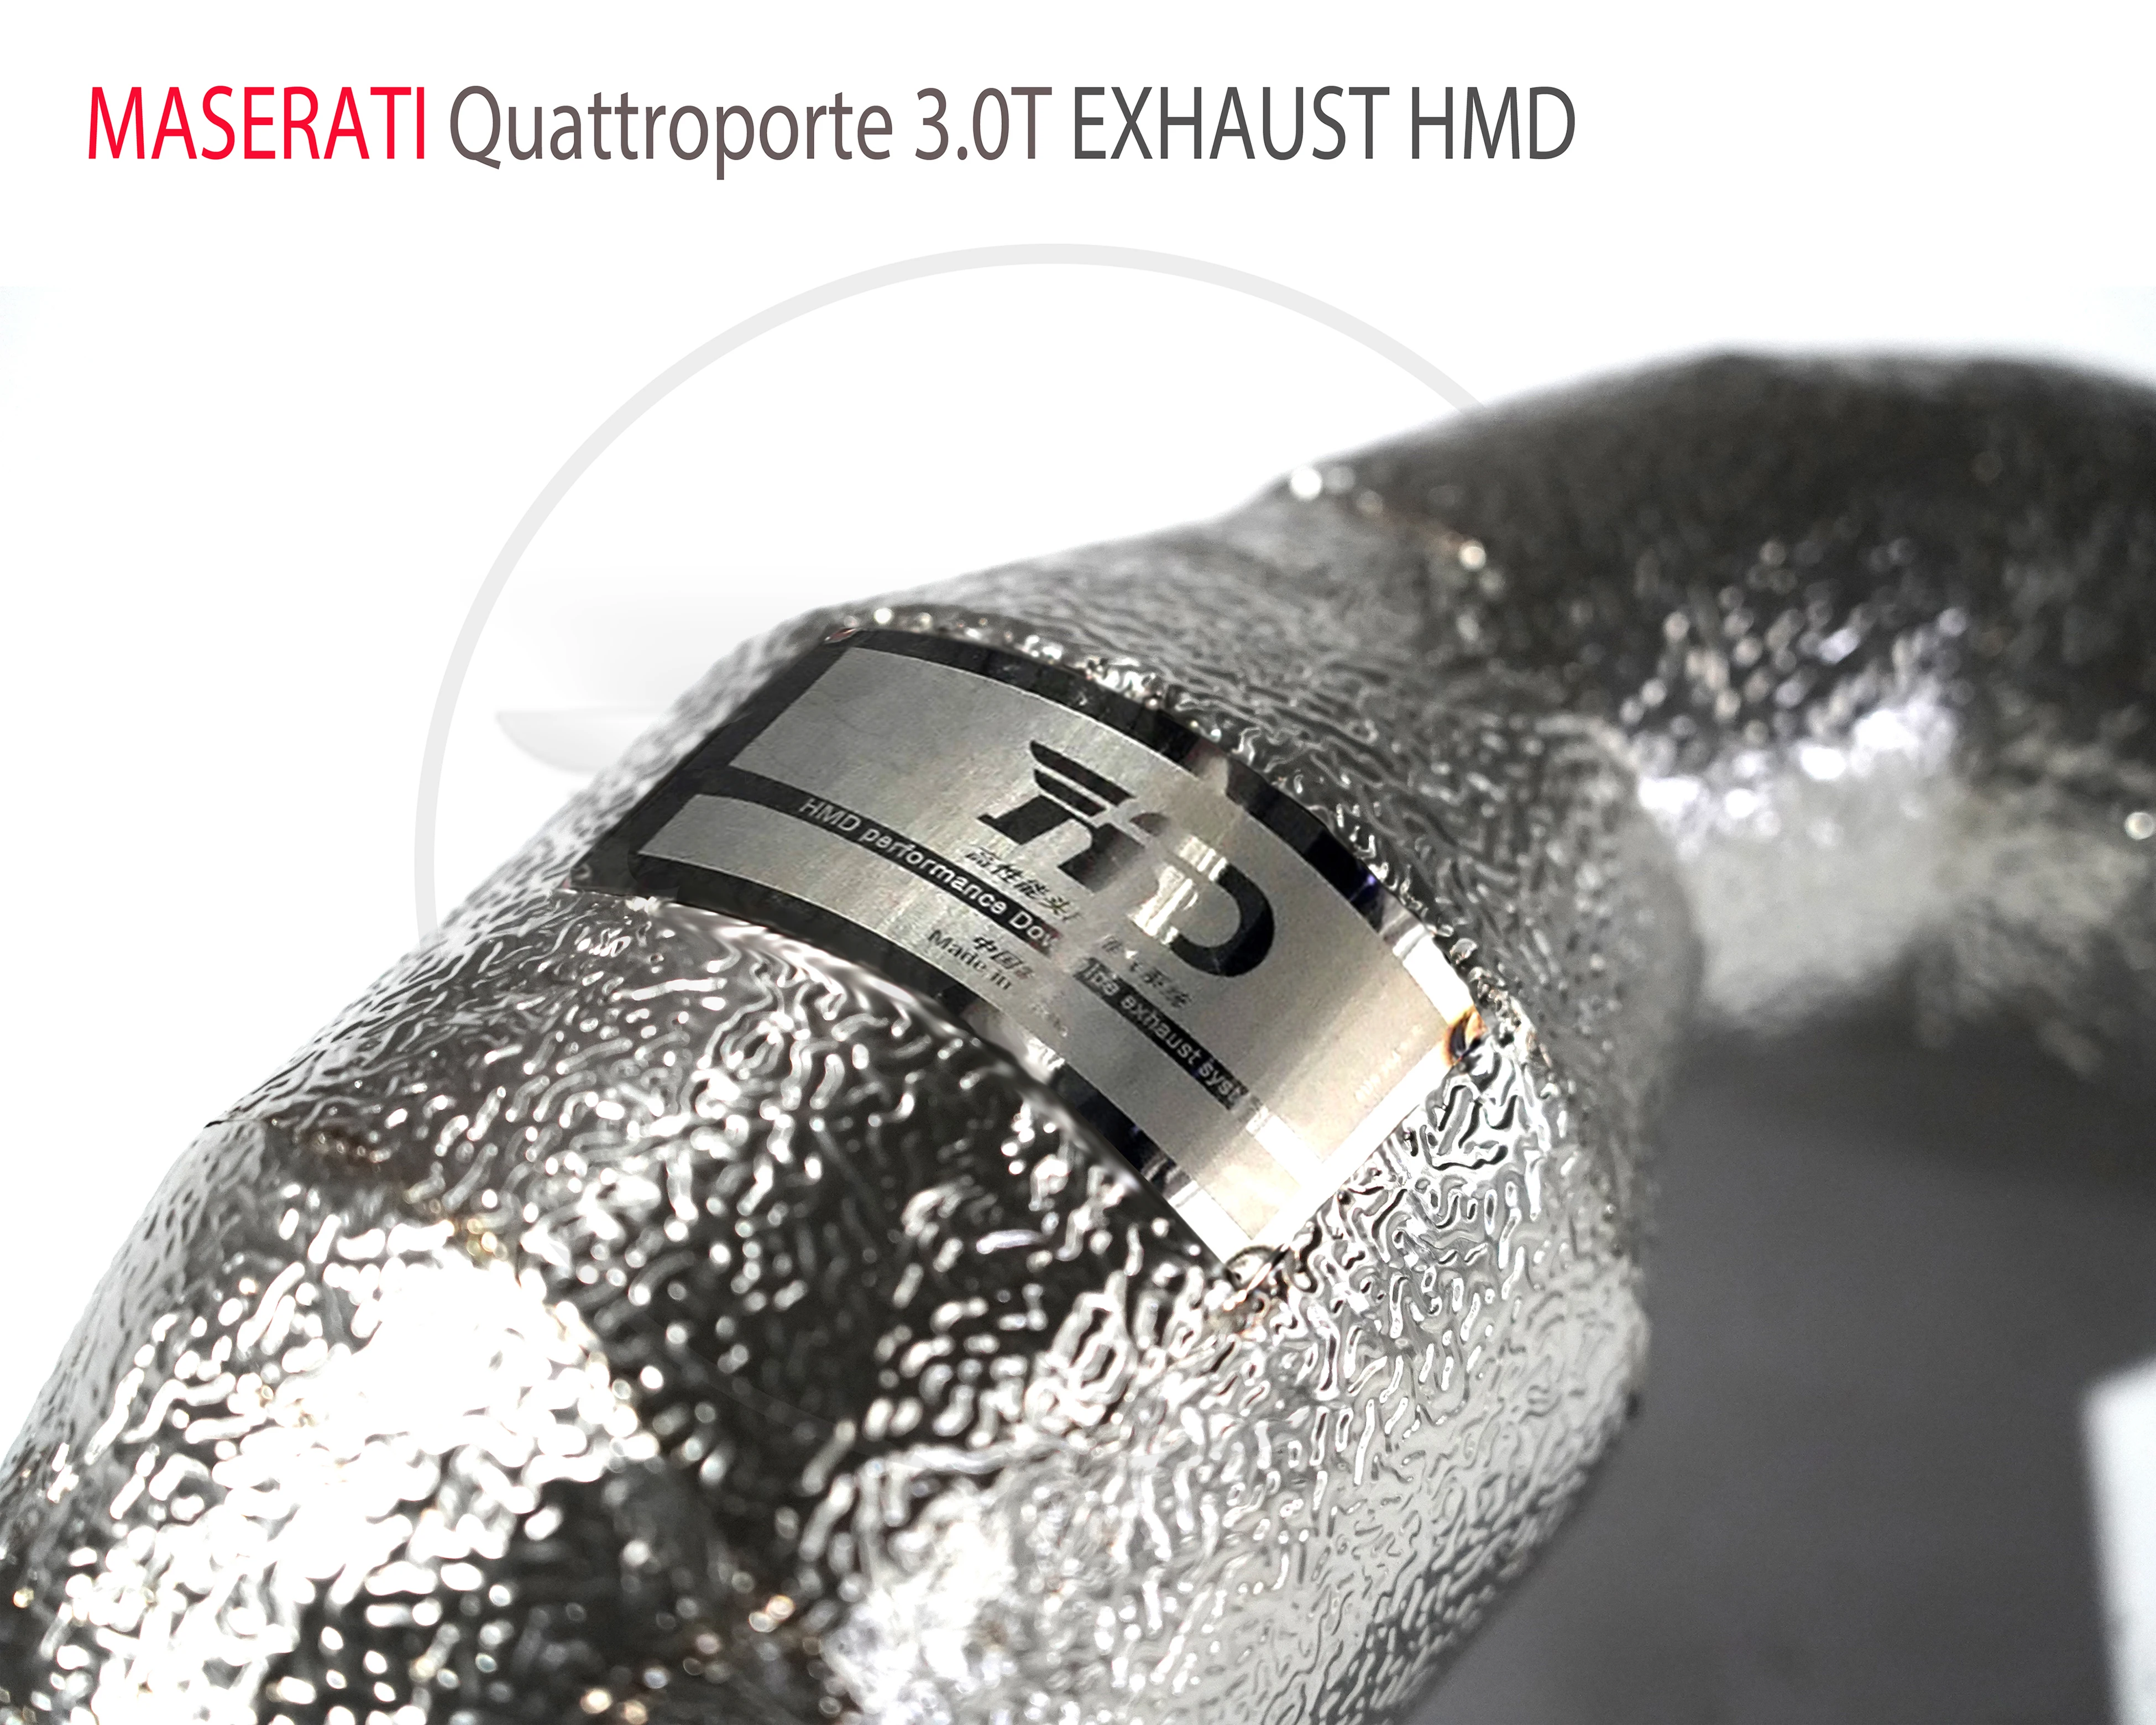 HMD נירוסטה סעפת פליטה עבור מזראטי Quattroporte 3.0 T אביזרי רכב עם קטליטי כותרת ללא חתול צינור . ' - ' . 5